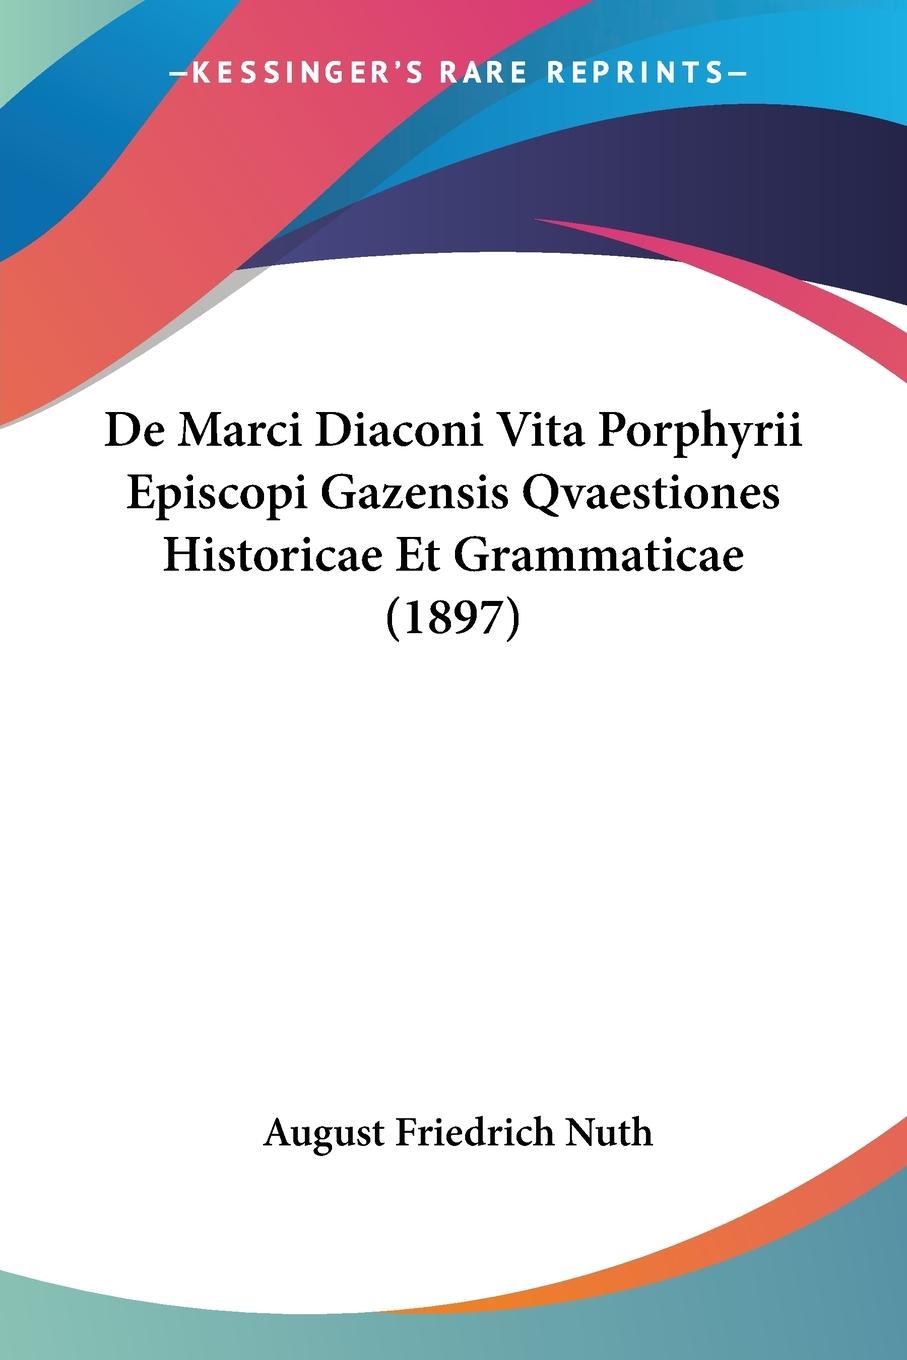 De Marci Diaconi Vita Porphyrii Episcopi Gazensis Qvaestiones Historicae Et Grammaticae (1897) - Nuth, August Friedrich